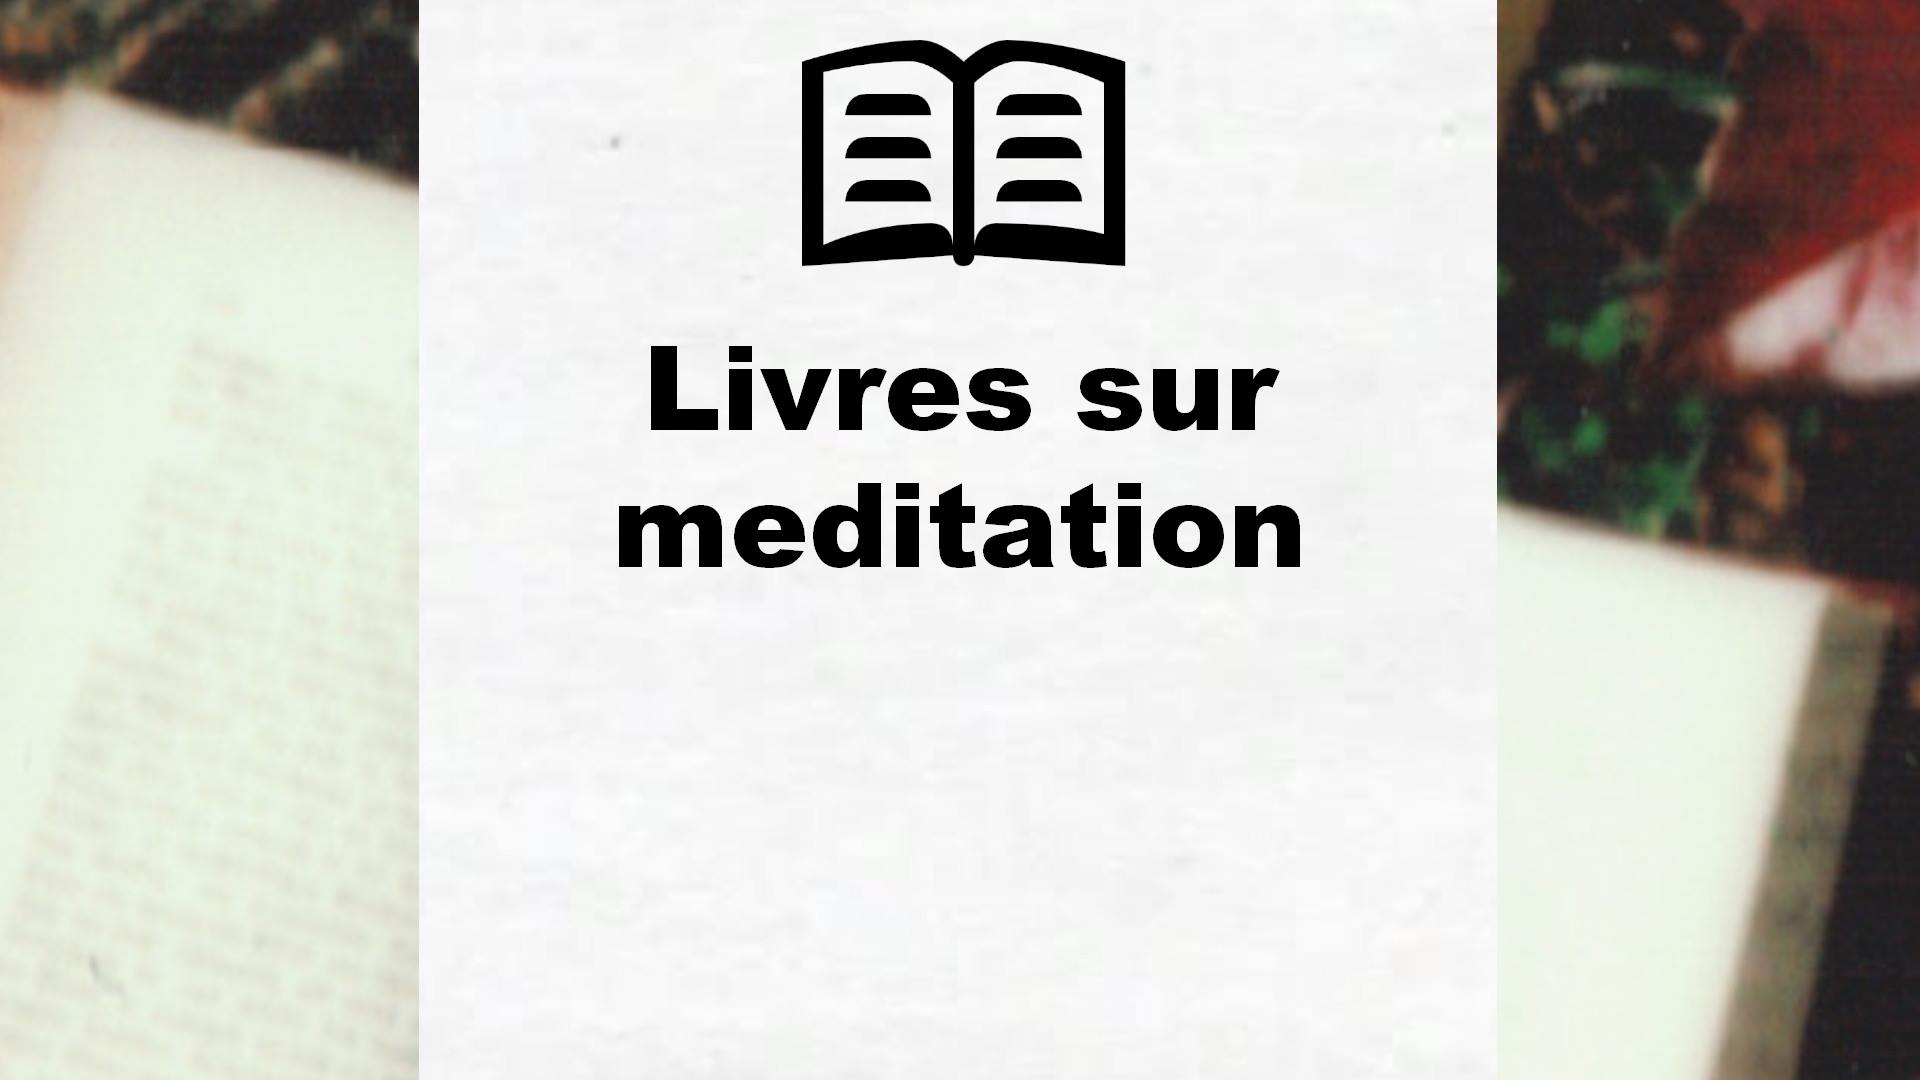 Livres sur meditation